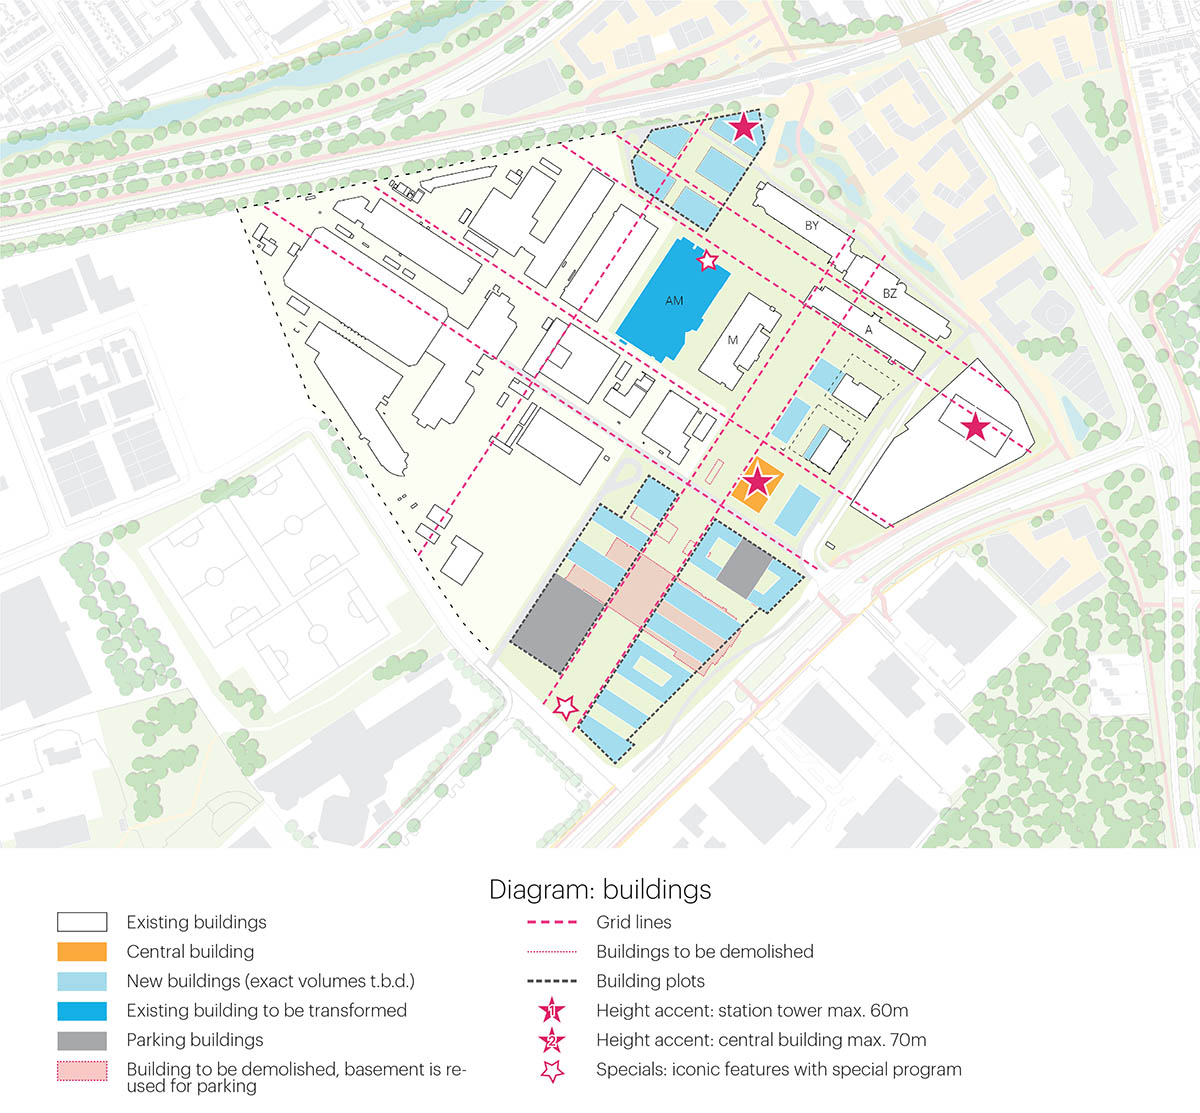 MVRDV reveals nature-inclusive masterplan for Noviotech Campus in Nijmegen